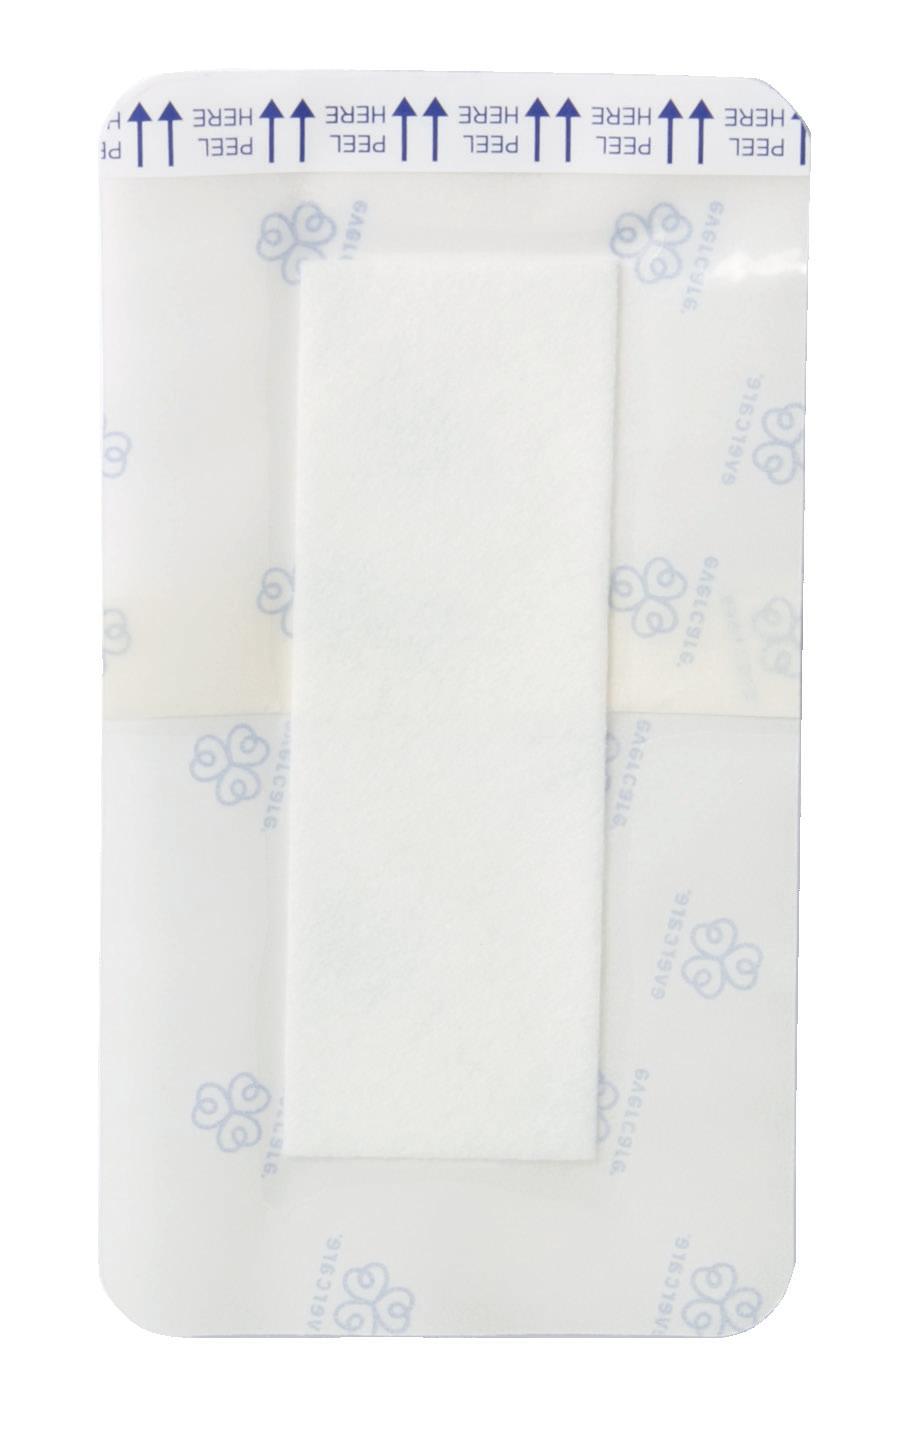 Transparentná náplasť s absorpčným vankúšikom Transparentní náplast s absorpčním polštářkem Adhesivo quirúrgico C/ gaza Penso cirurgico C/ compressa Do not use if package is damaged.